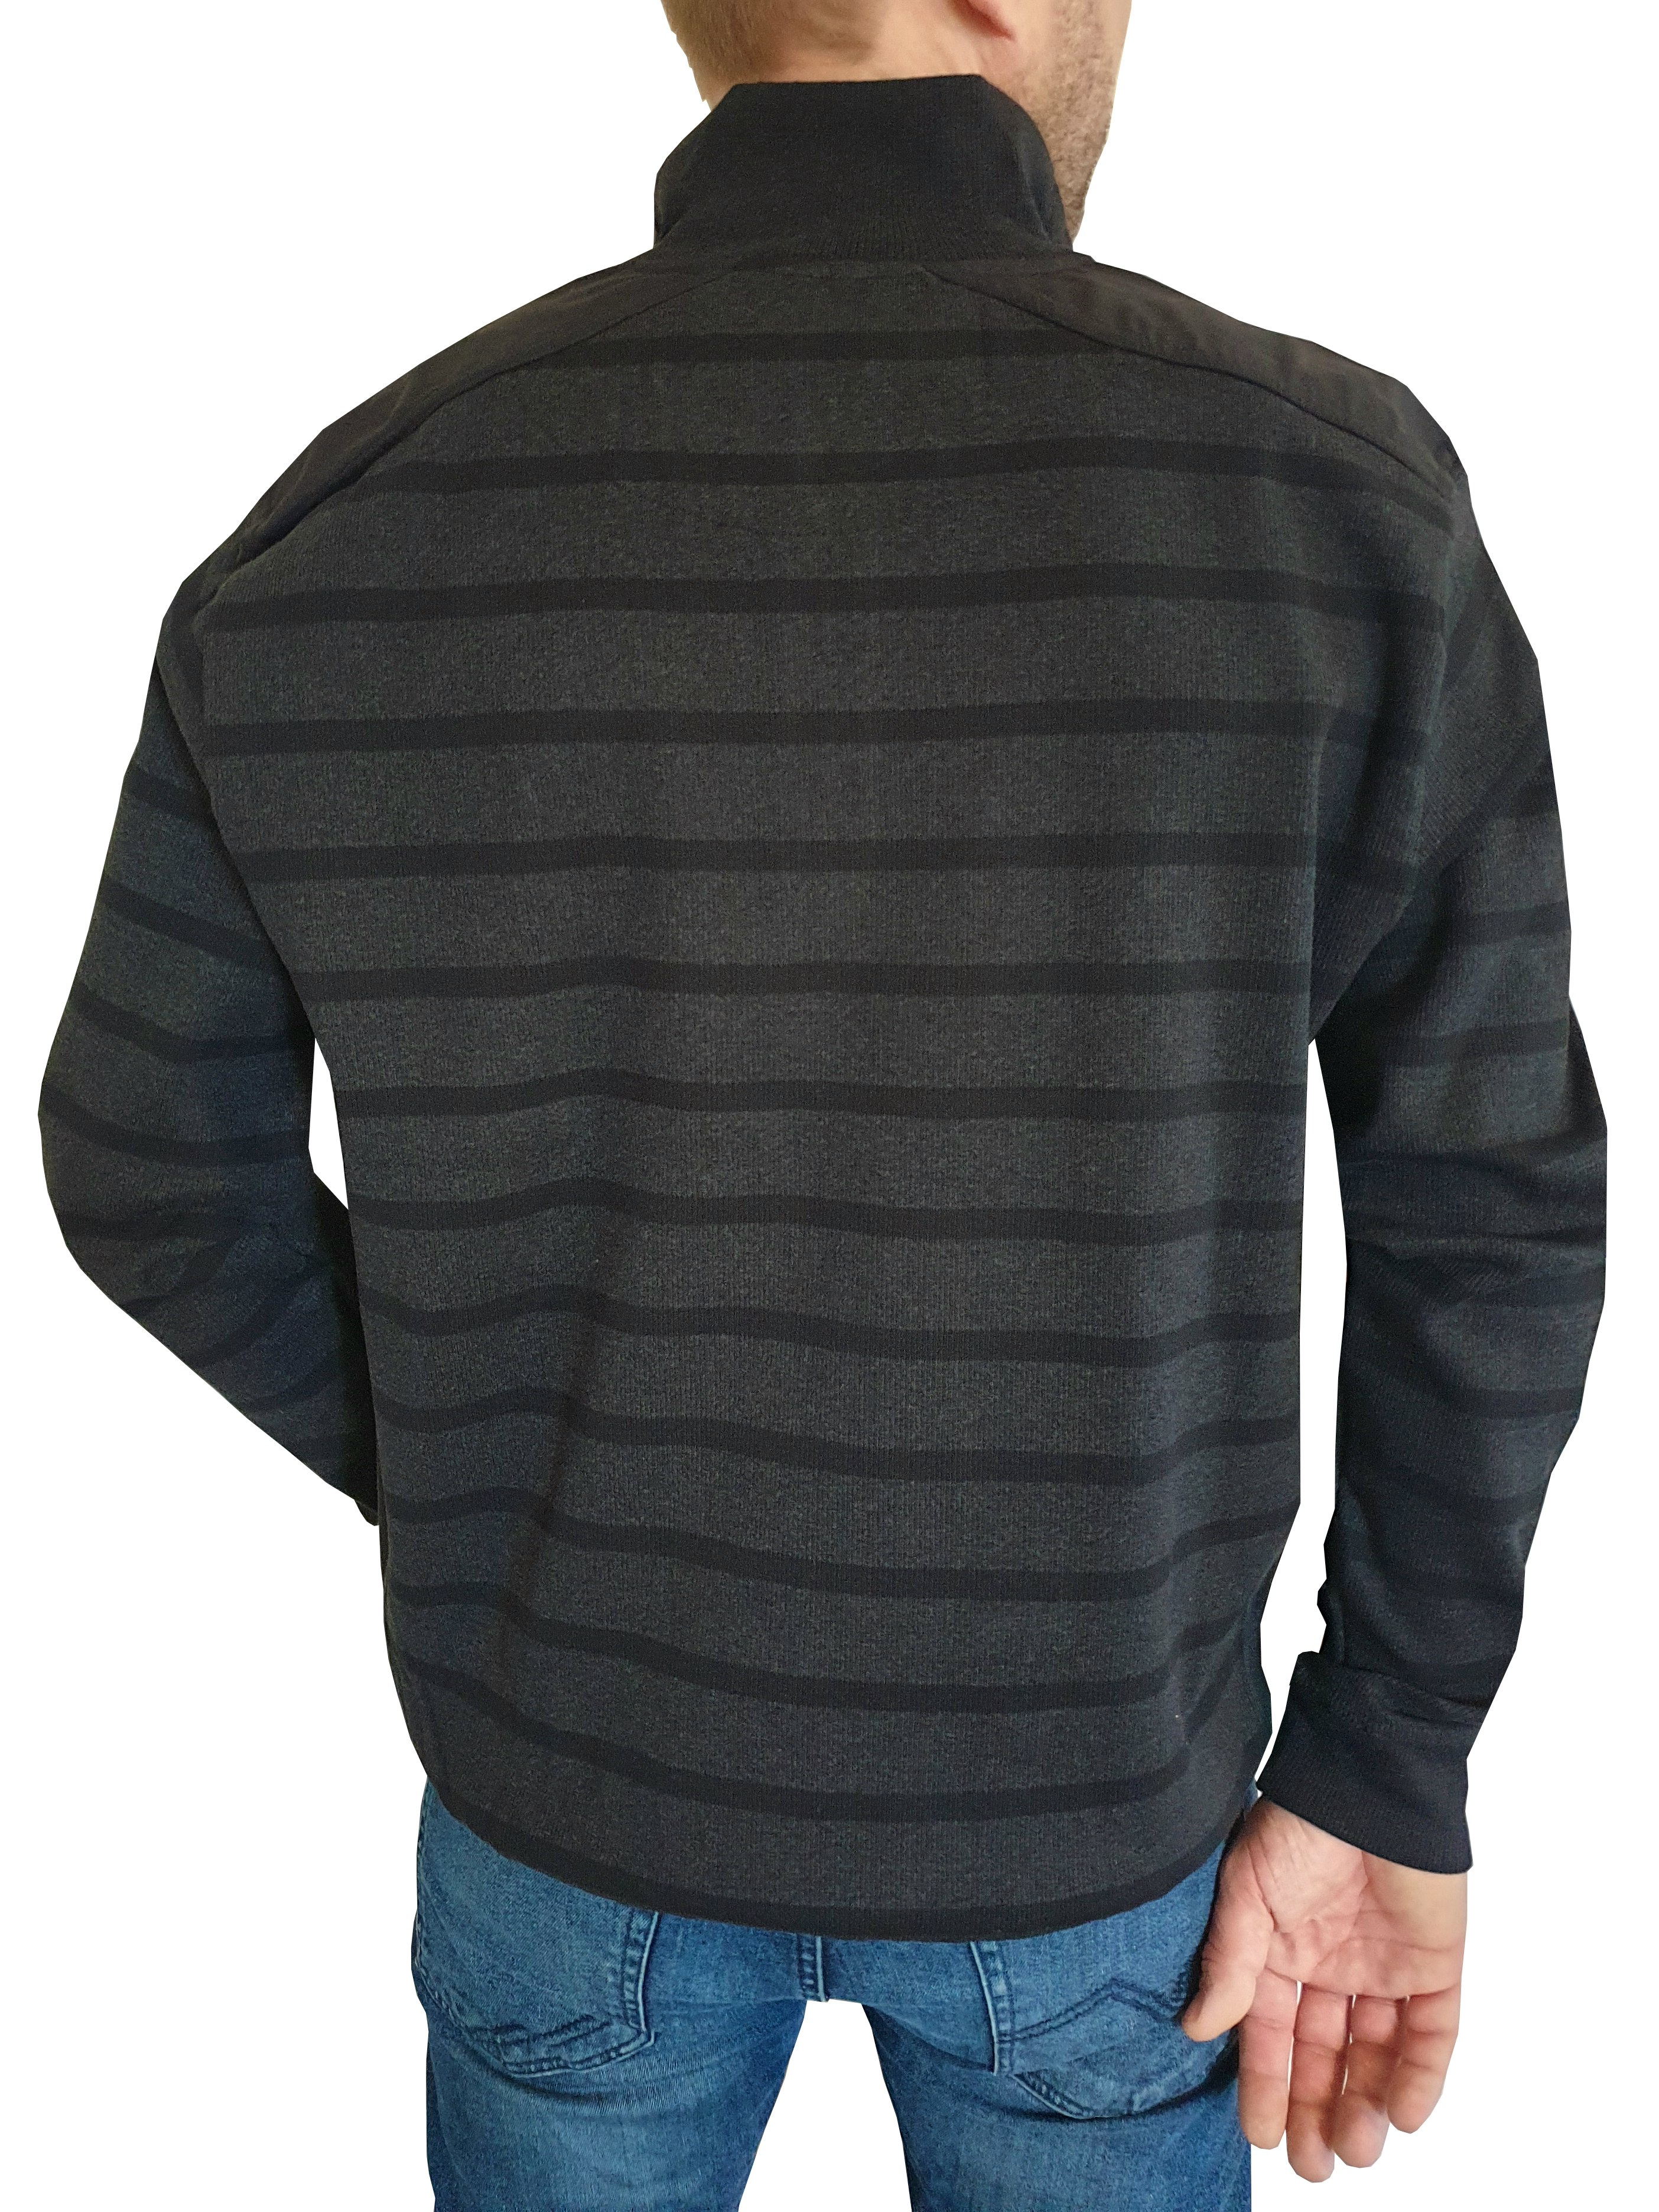 Kera Collection Pullover Striped grau